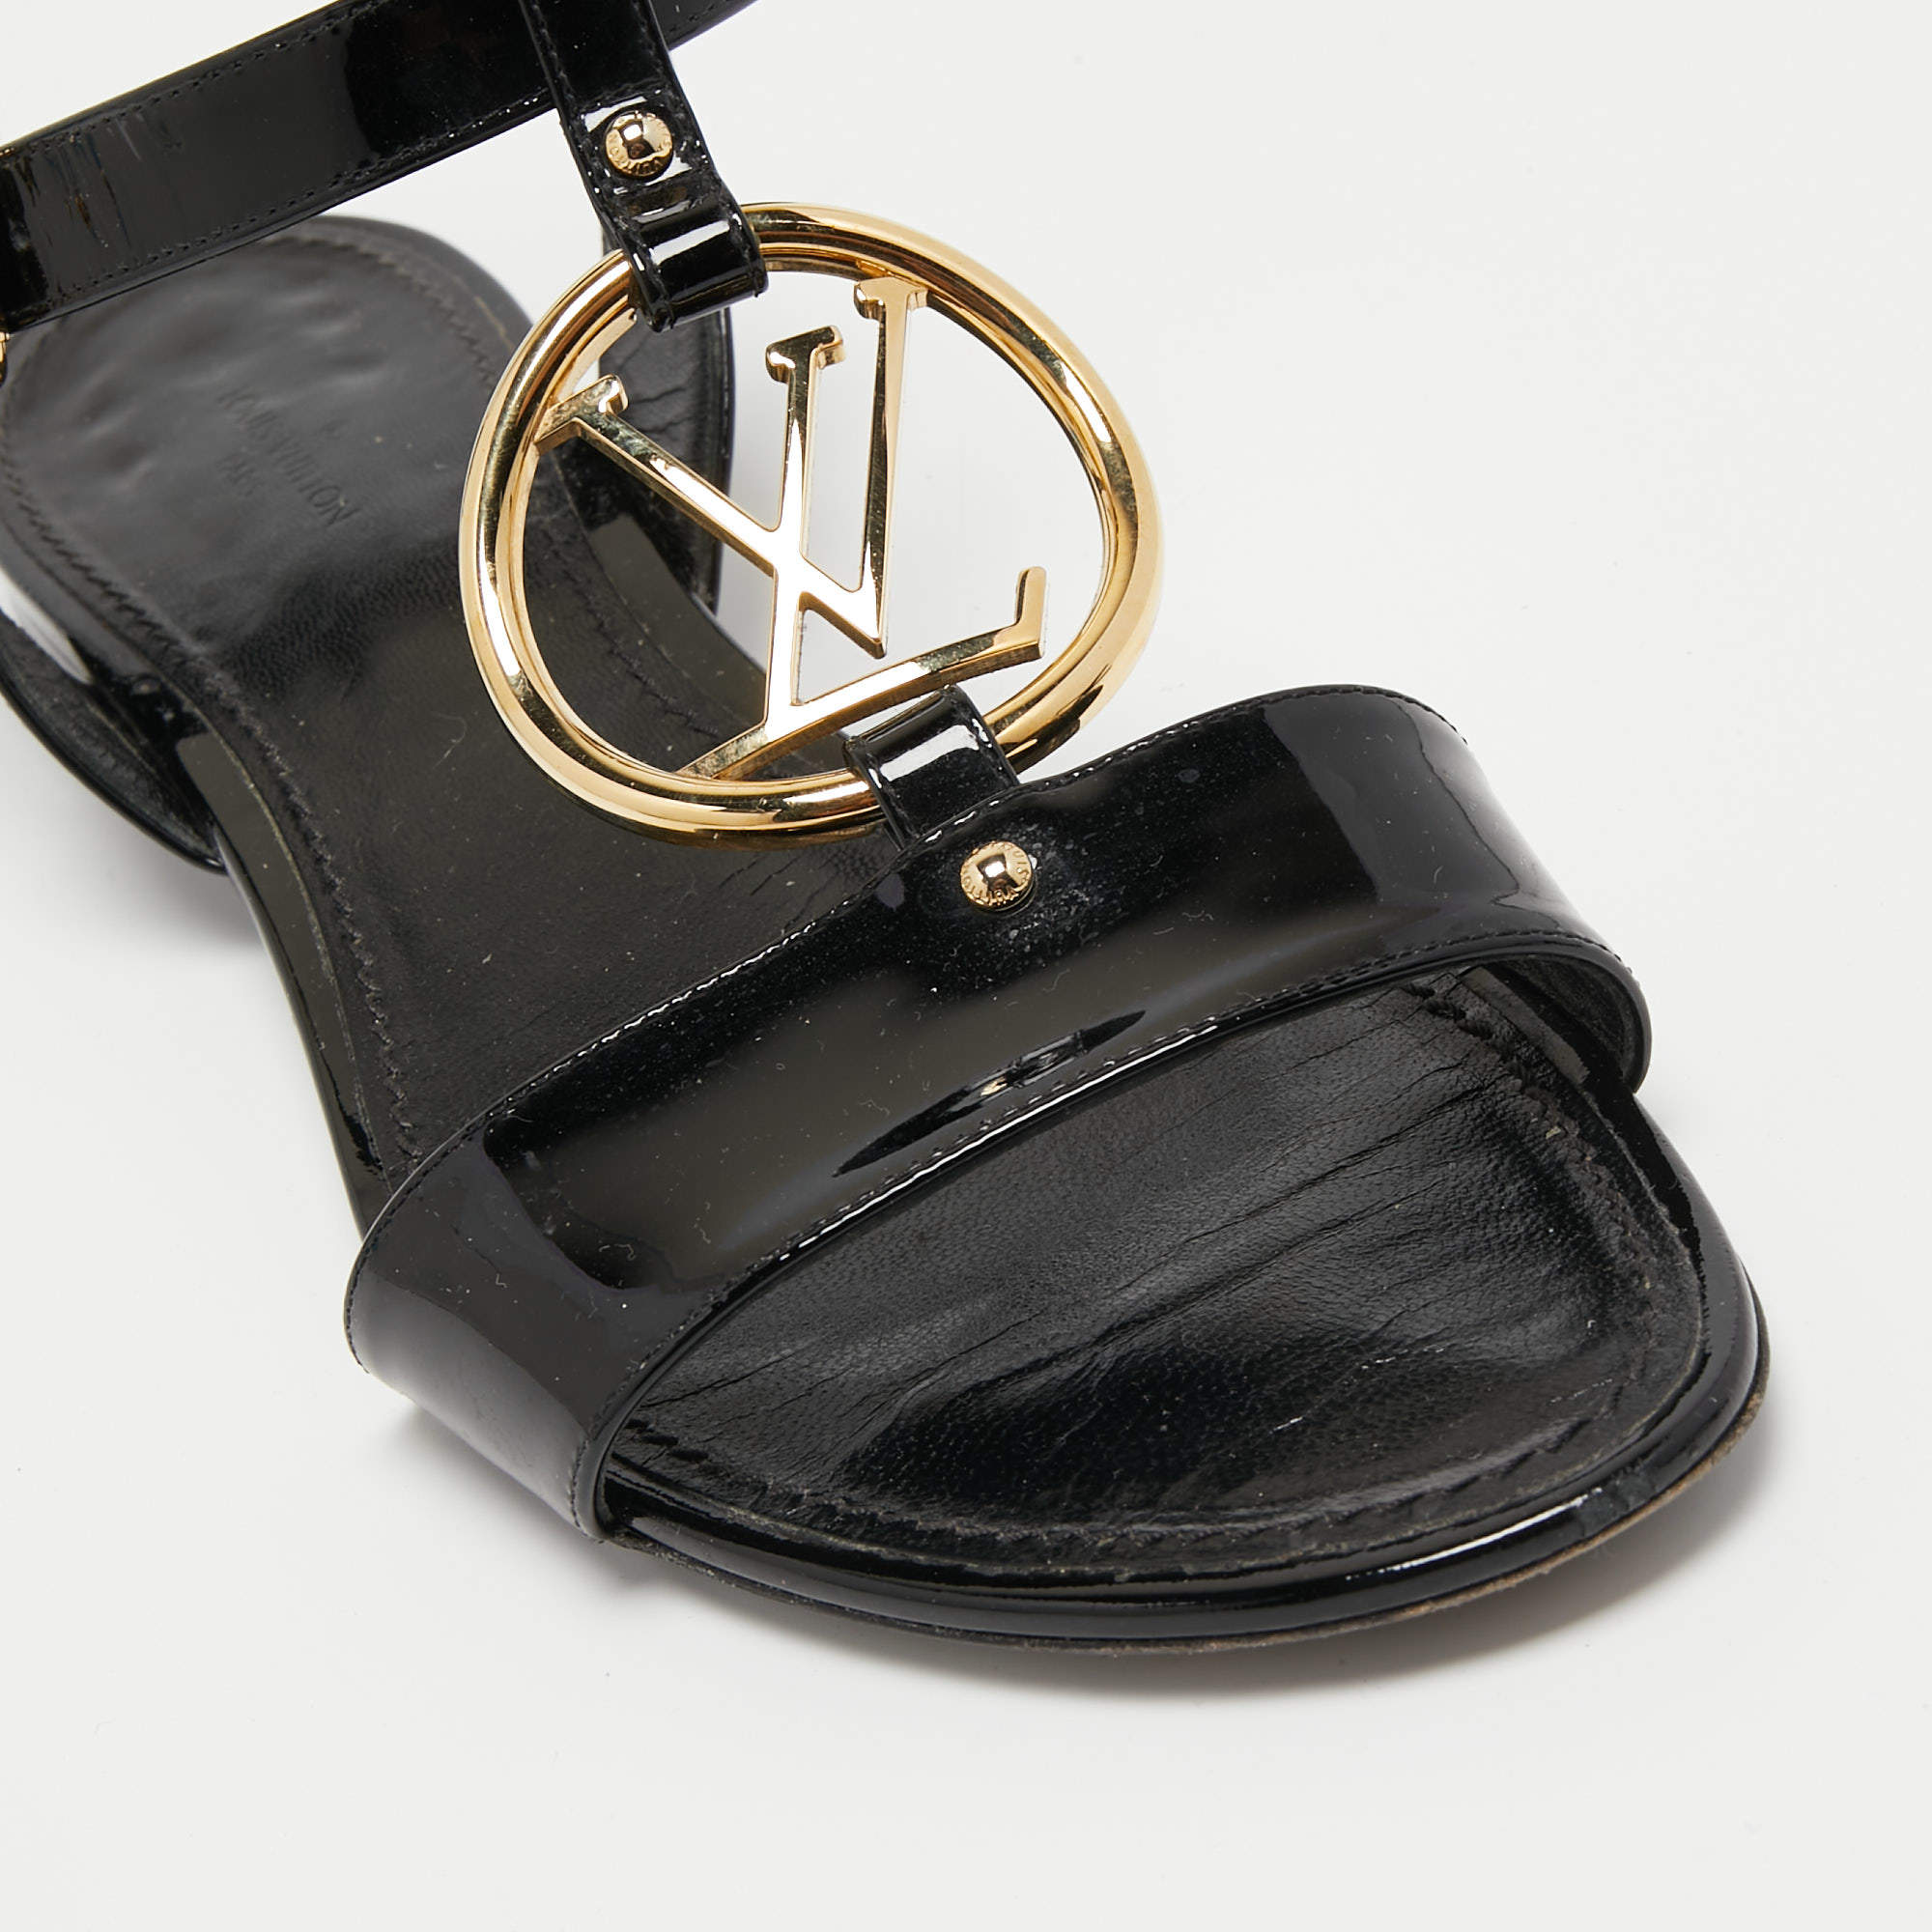 Louis Vuitton Pink Patent Leather/Snakeskin Sunseeker Flat Sandal